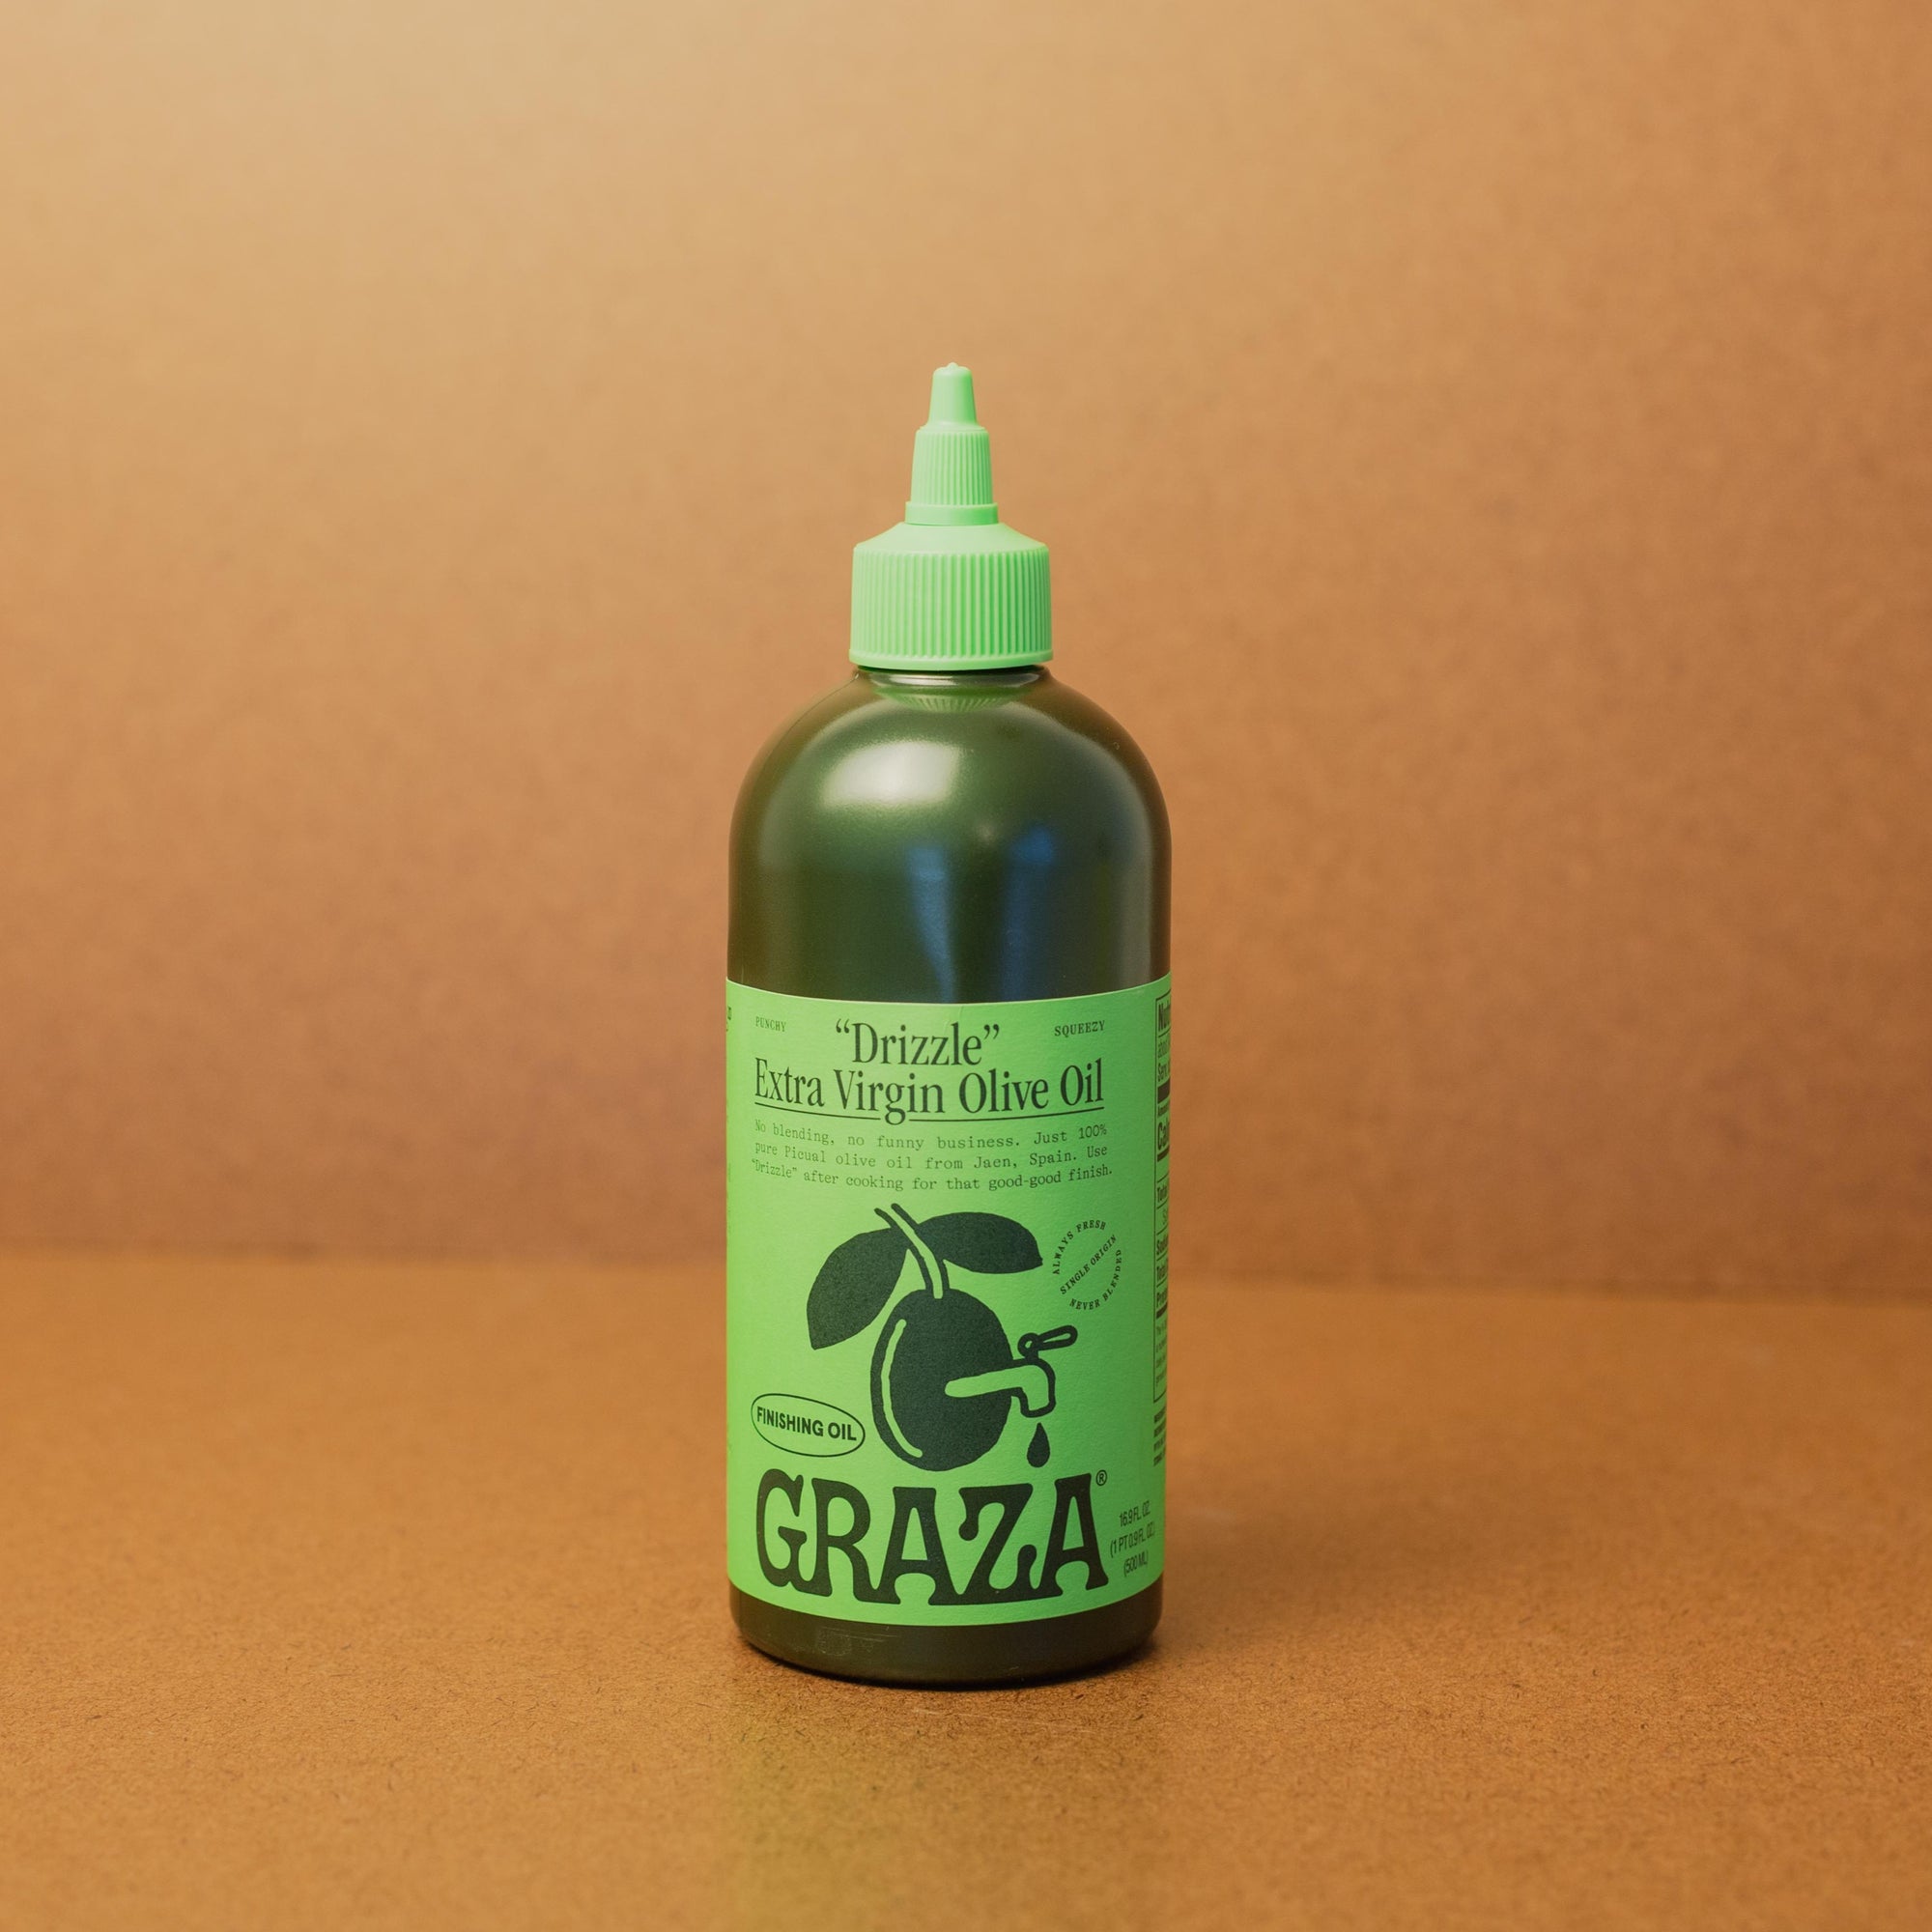 Graza "Drizzle" Extra Virgin Olive Oil 